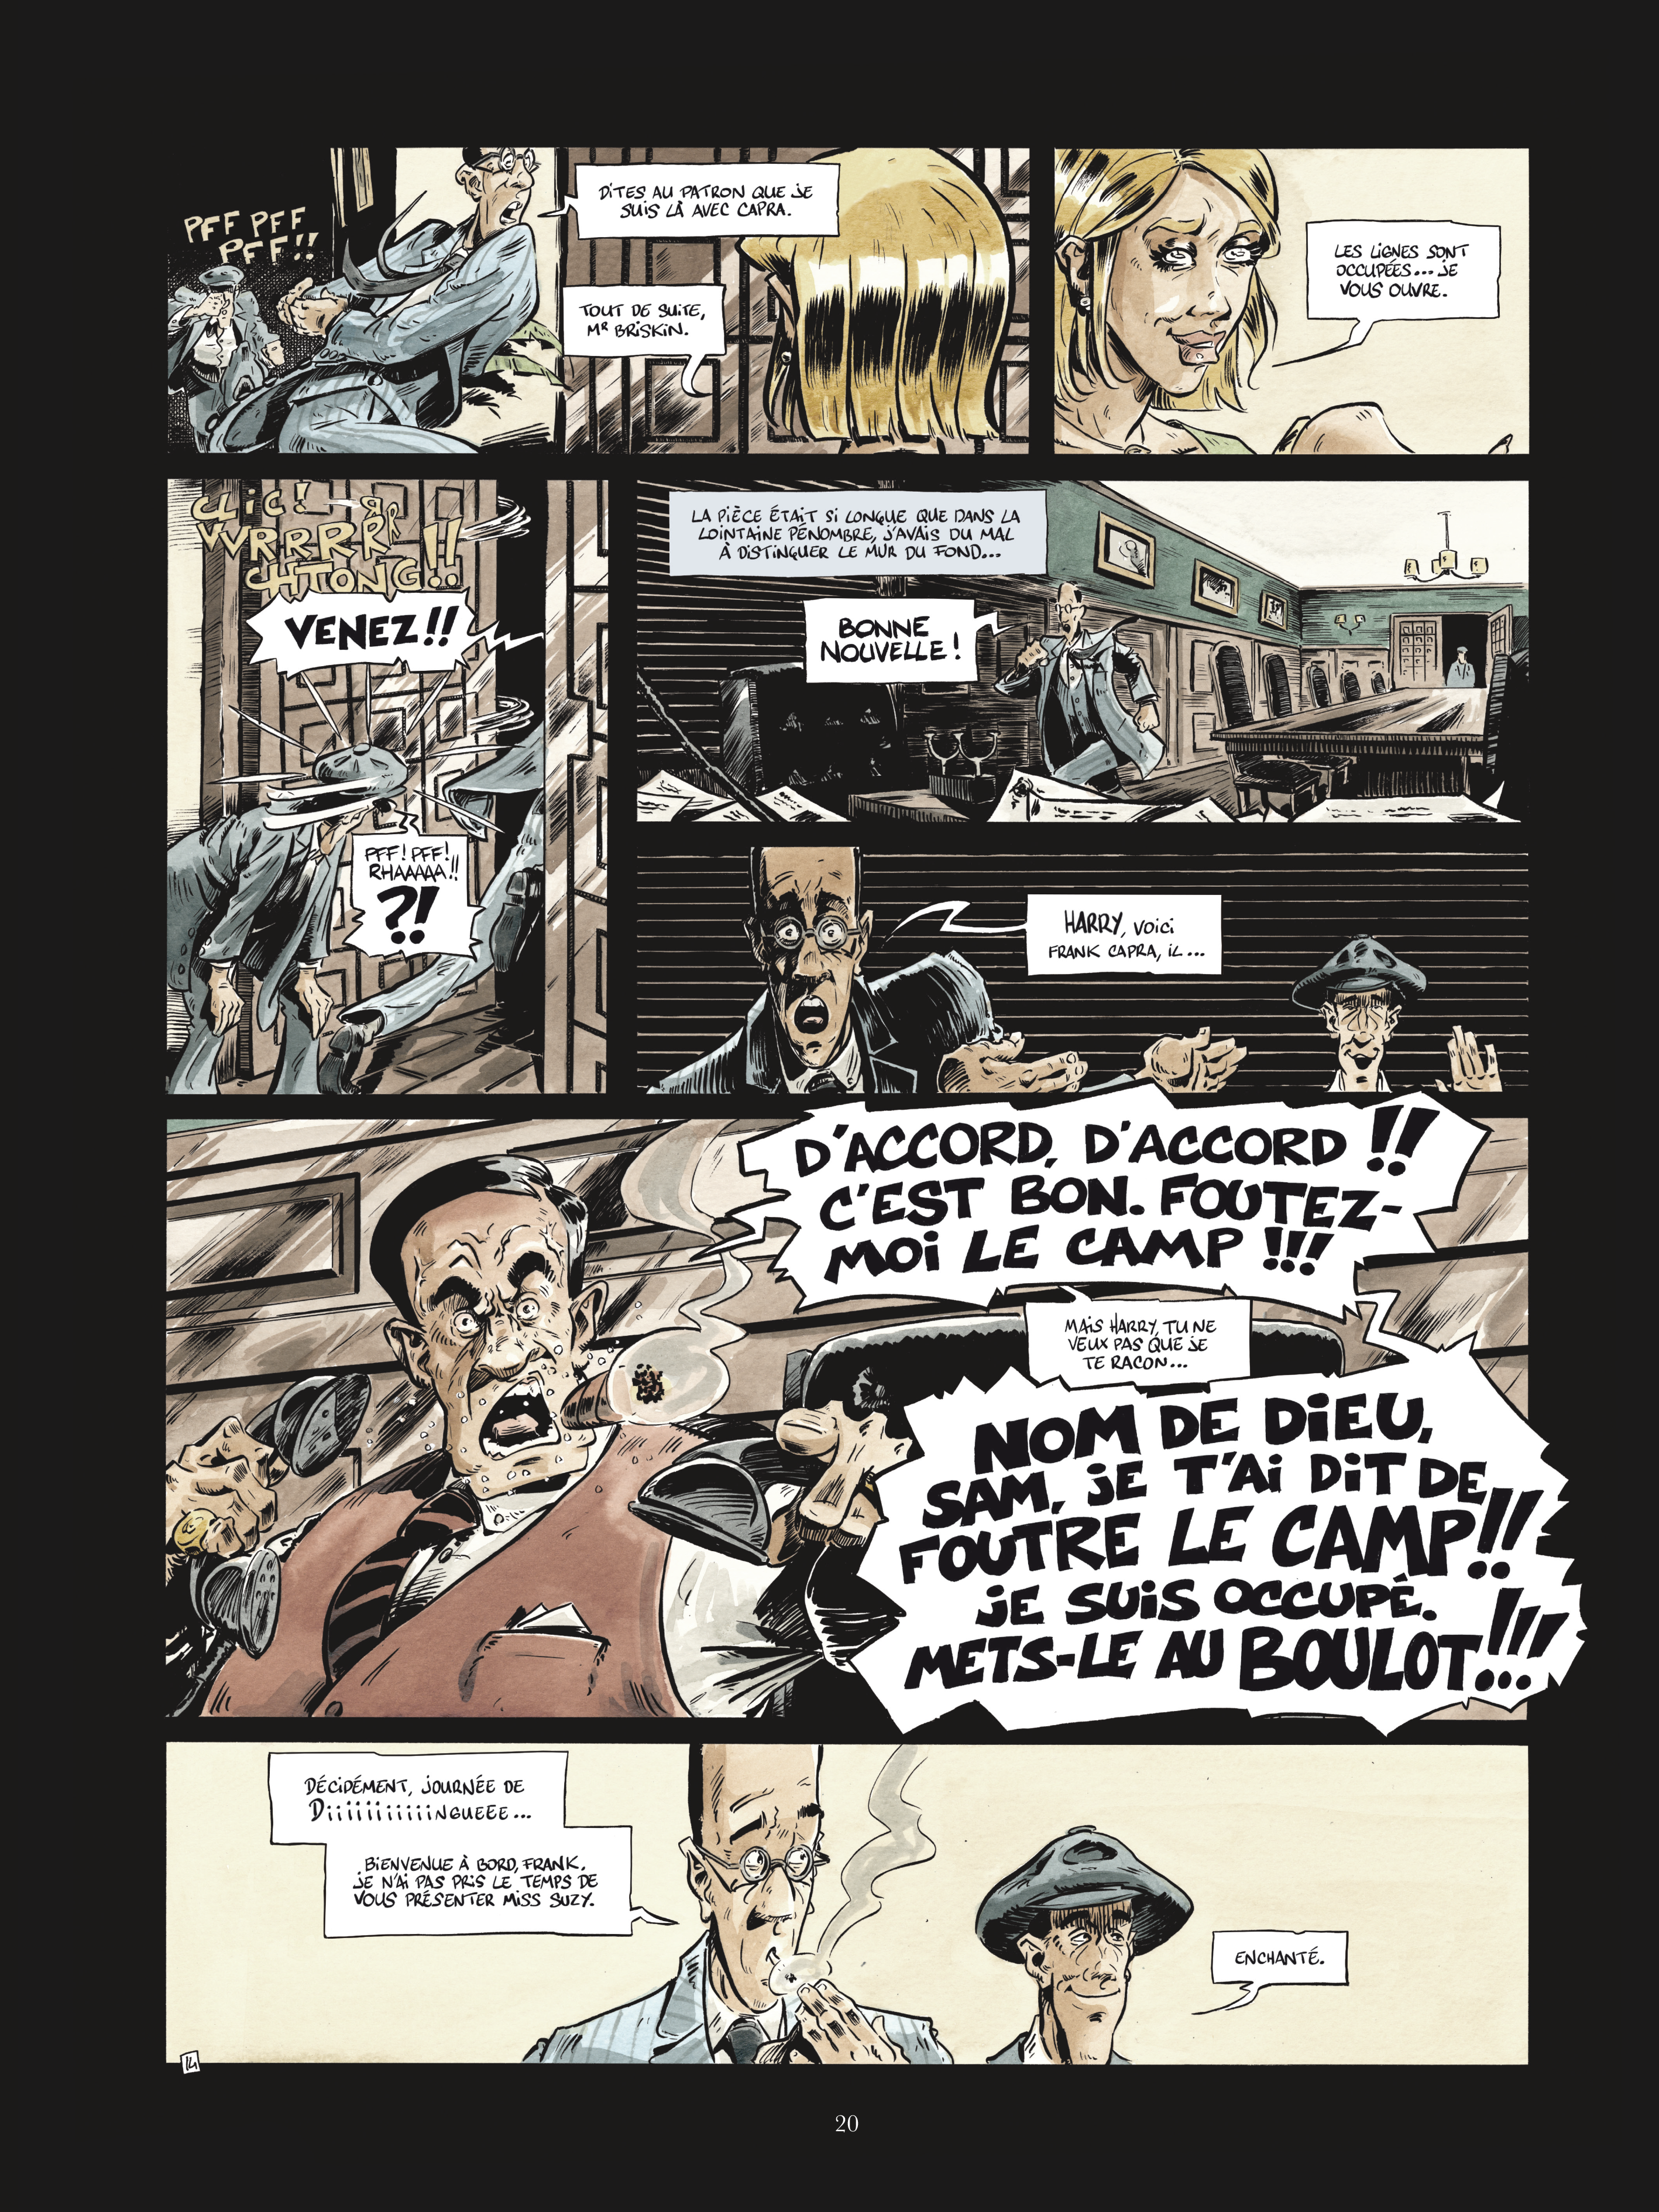 The Extravagant Mr. Capra by Arnaud Michel and Antoine Lassalle - Comic strip 